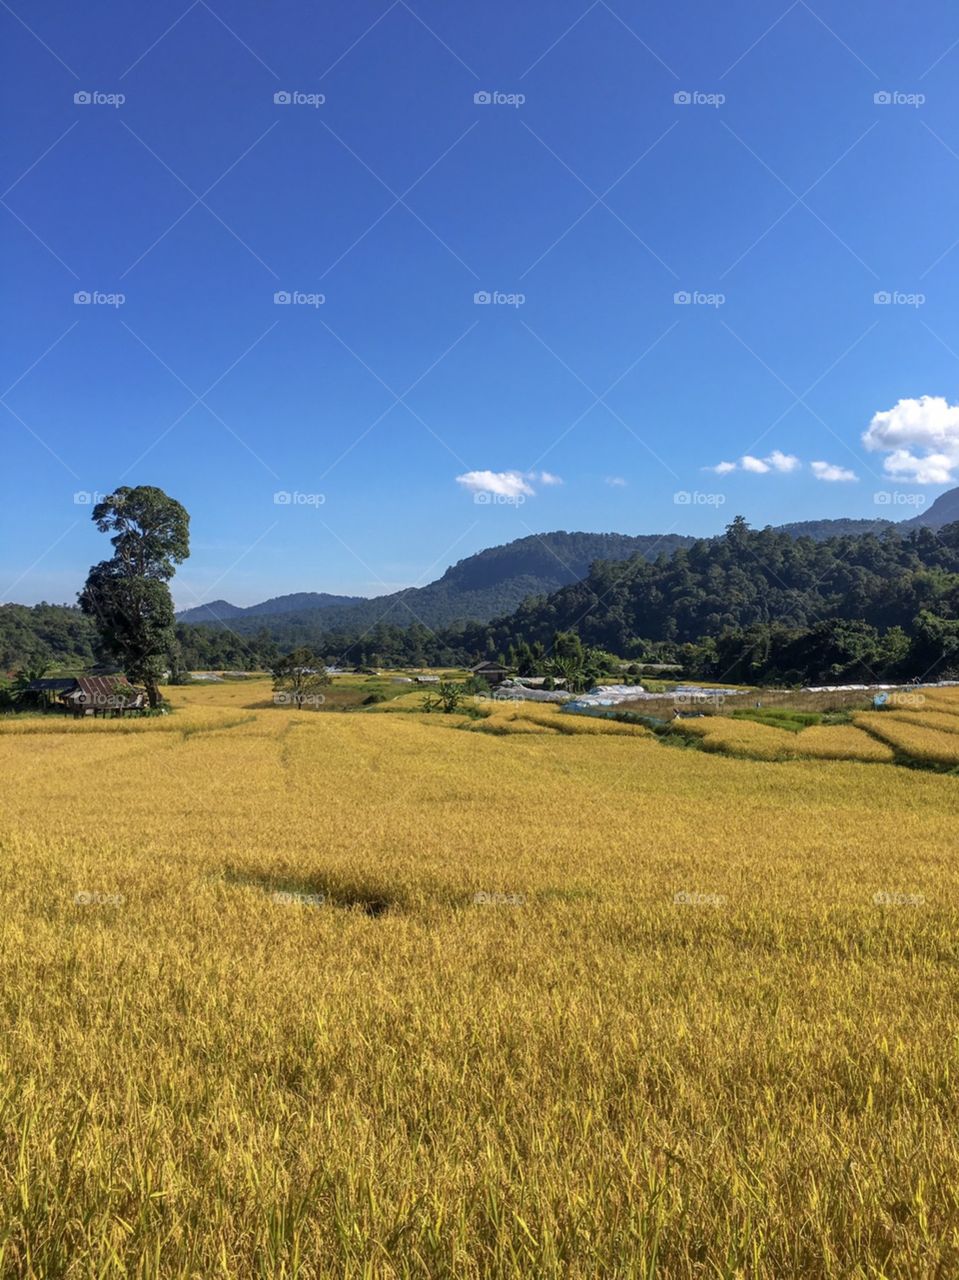 An amazing of my Rice paddy field!